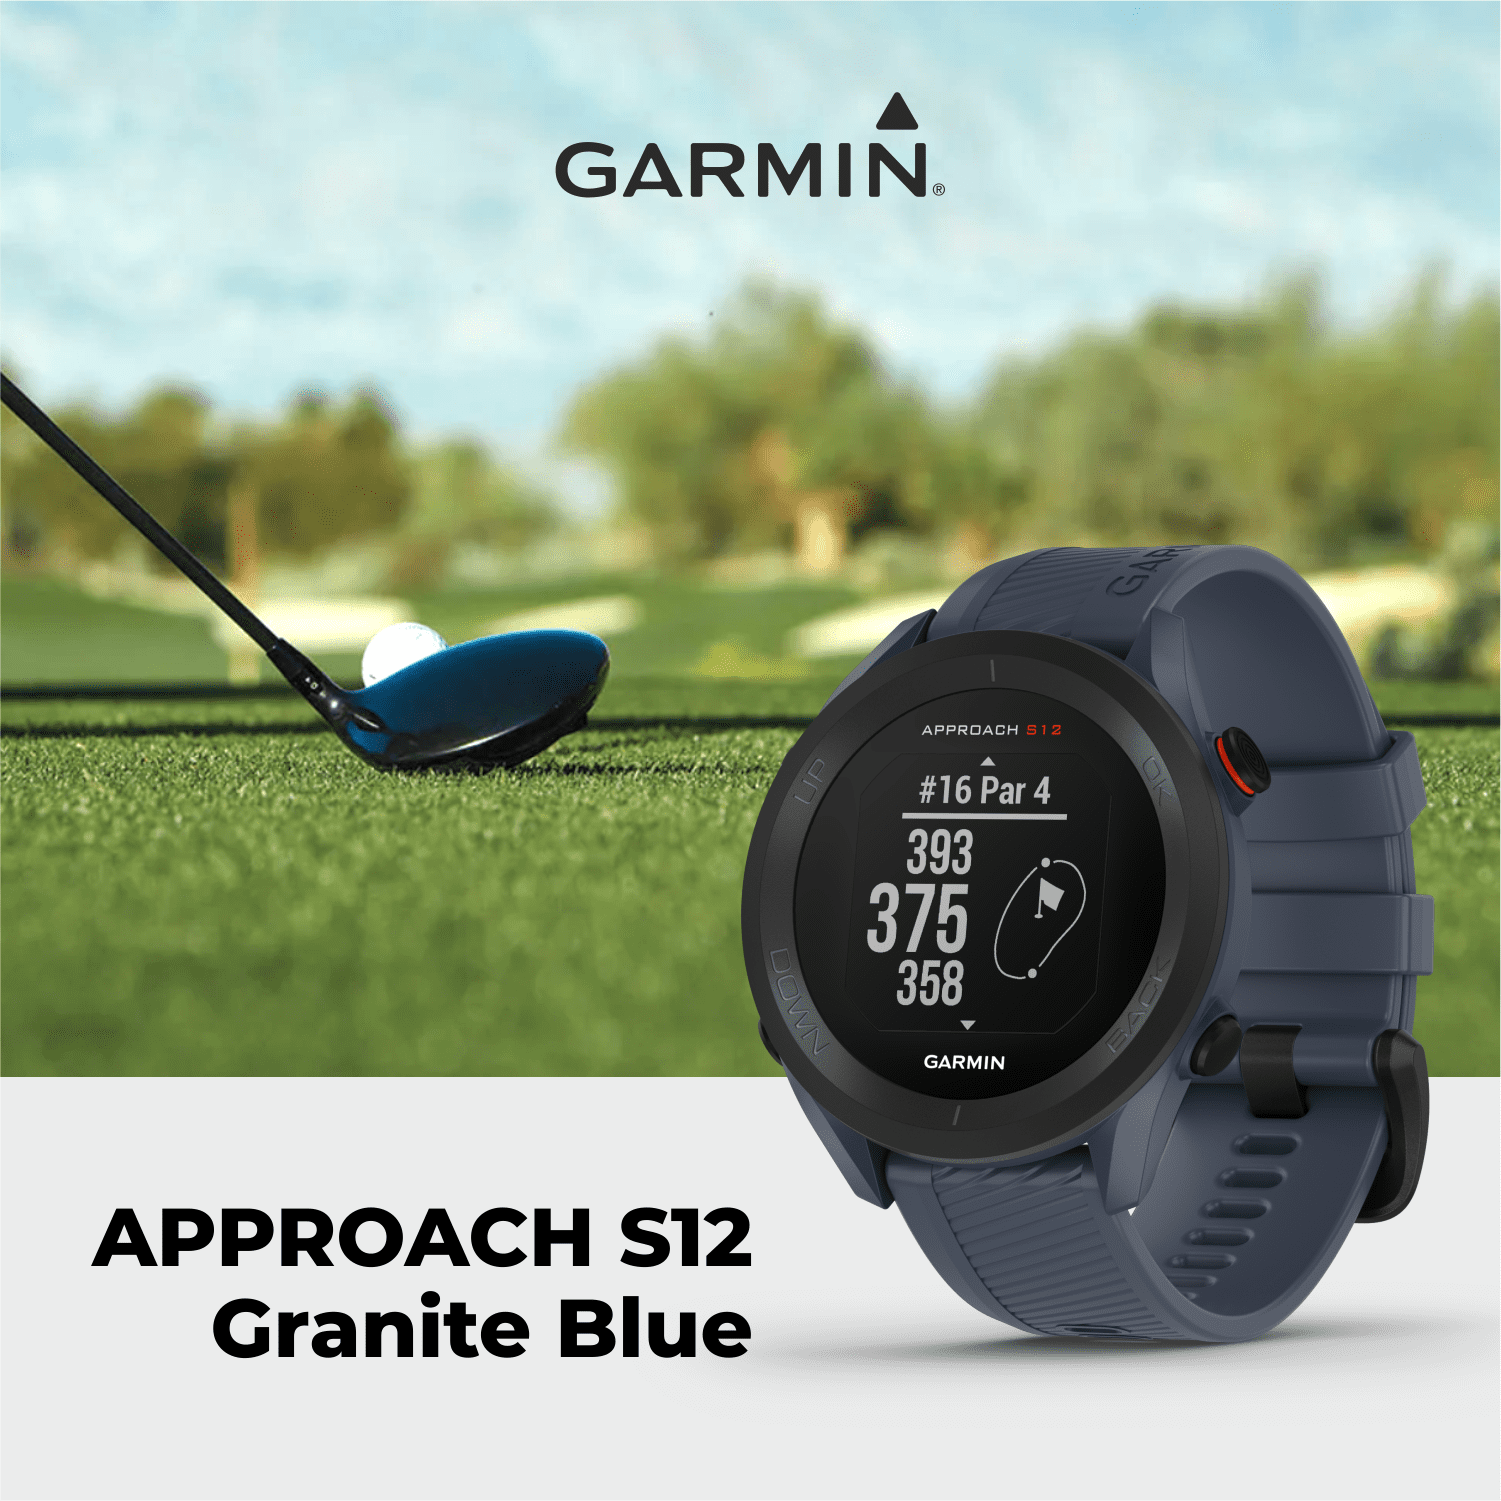 Garmin Approach S12 Premium GPS Golf Watch, Granite Blue with 